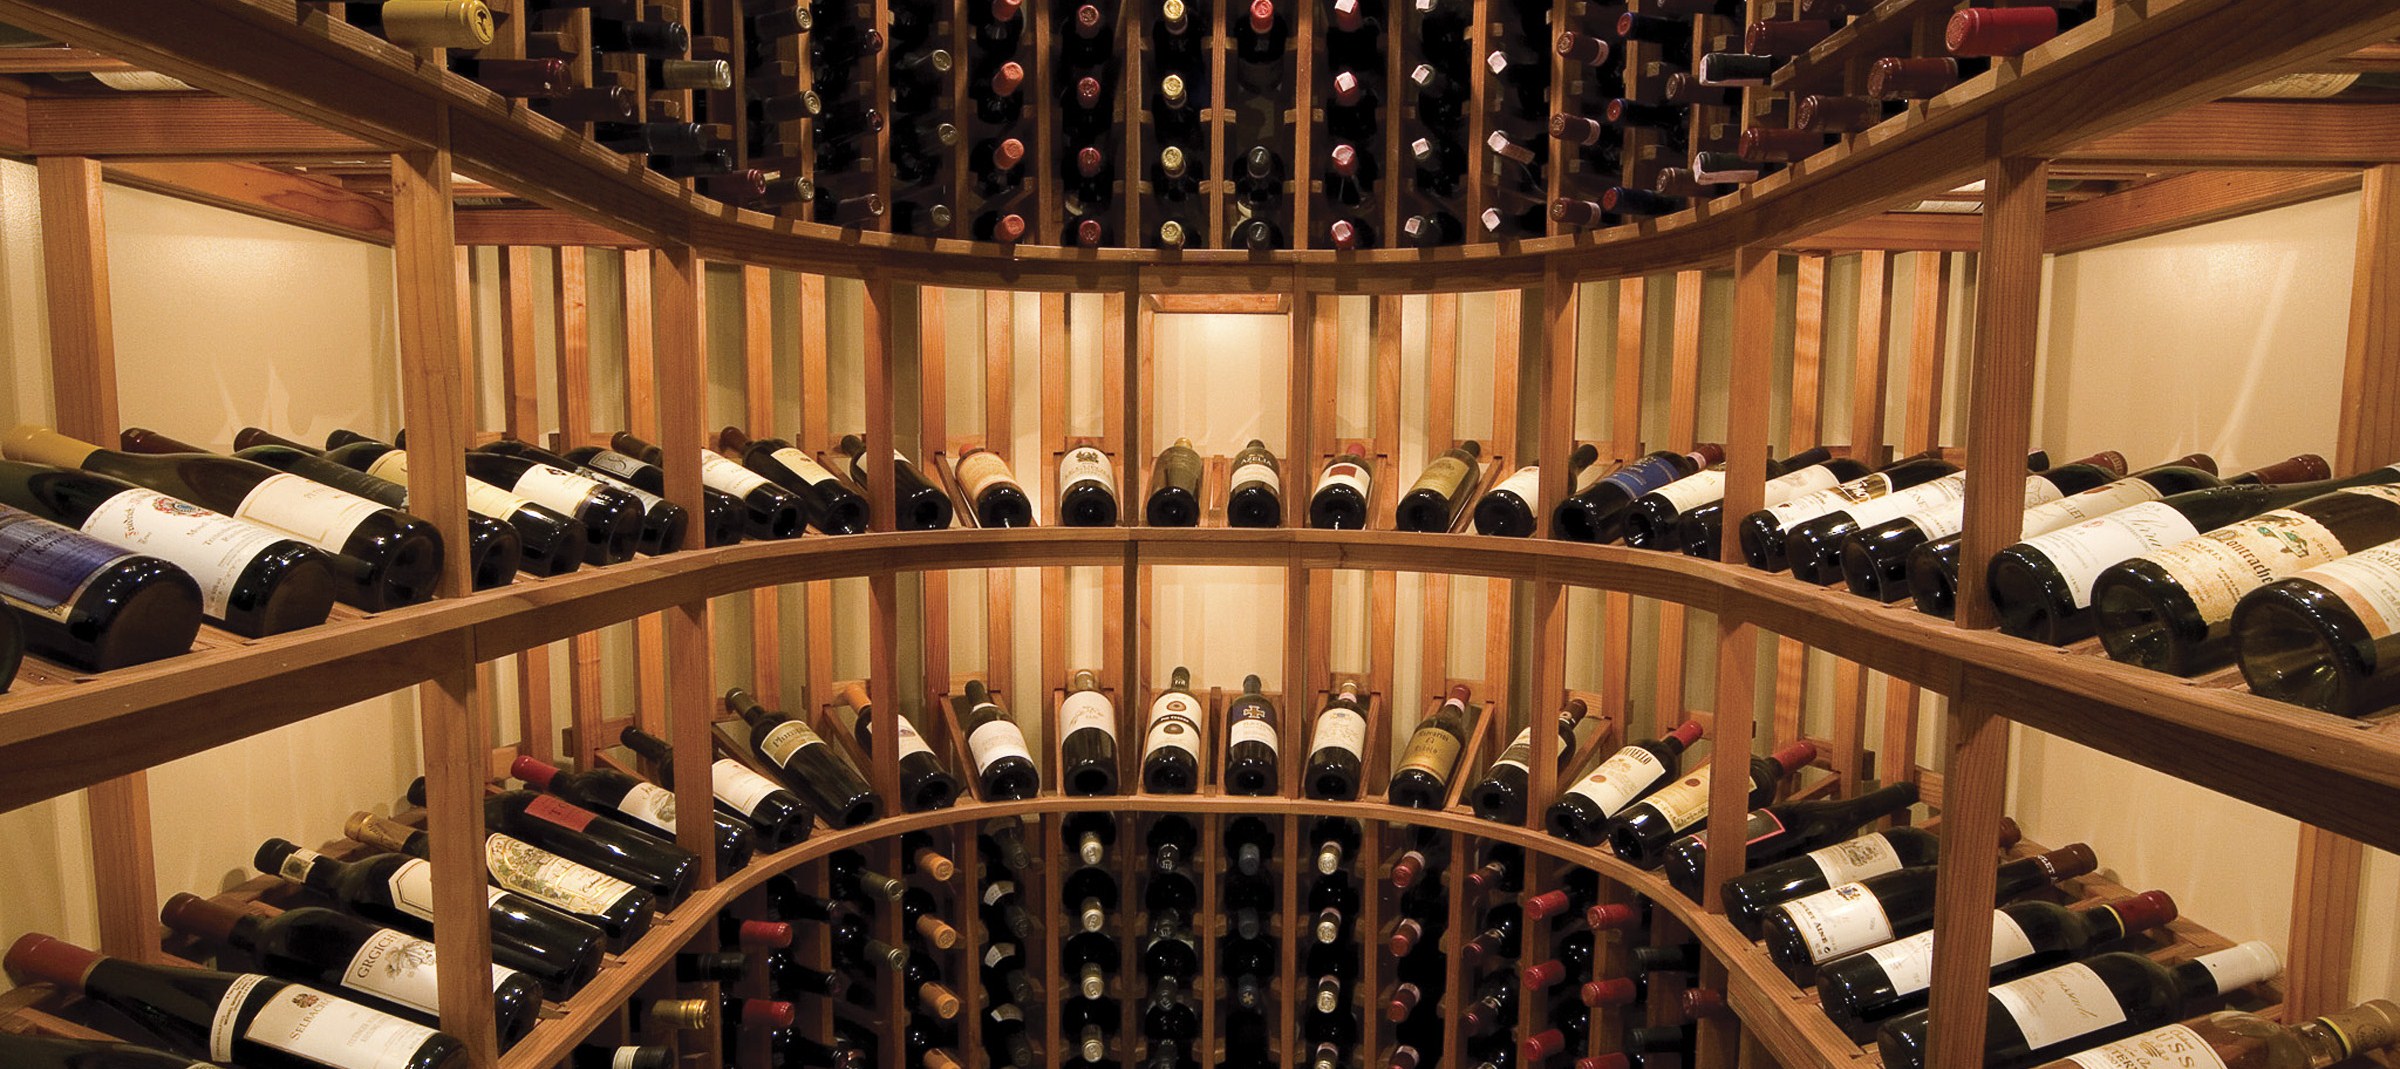 Wine Cellar #17